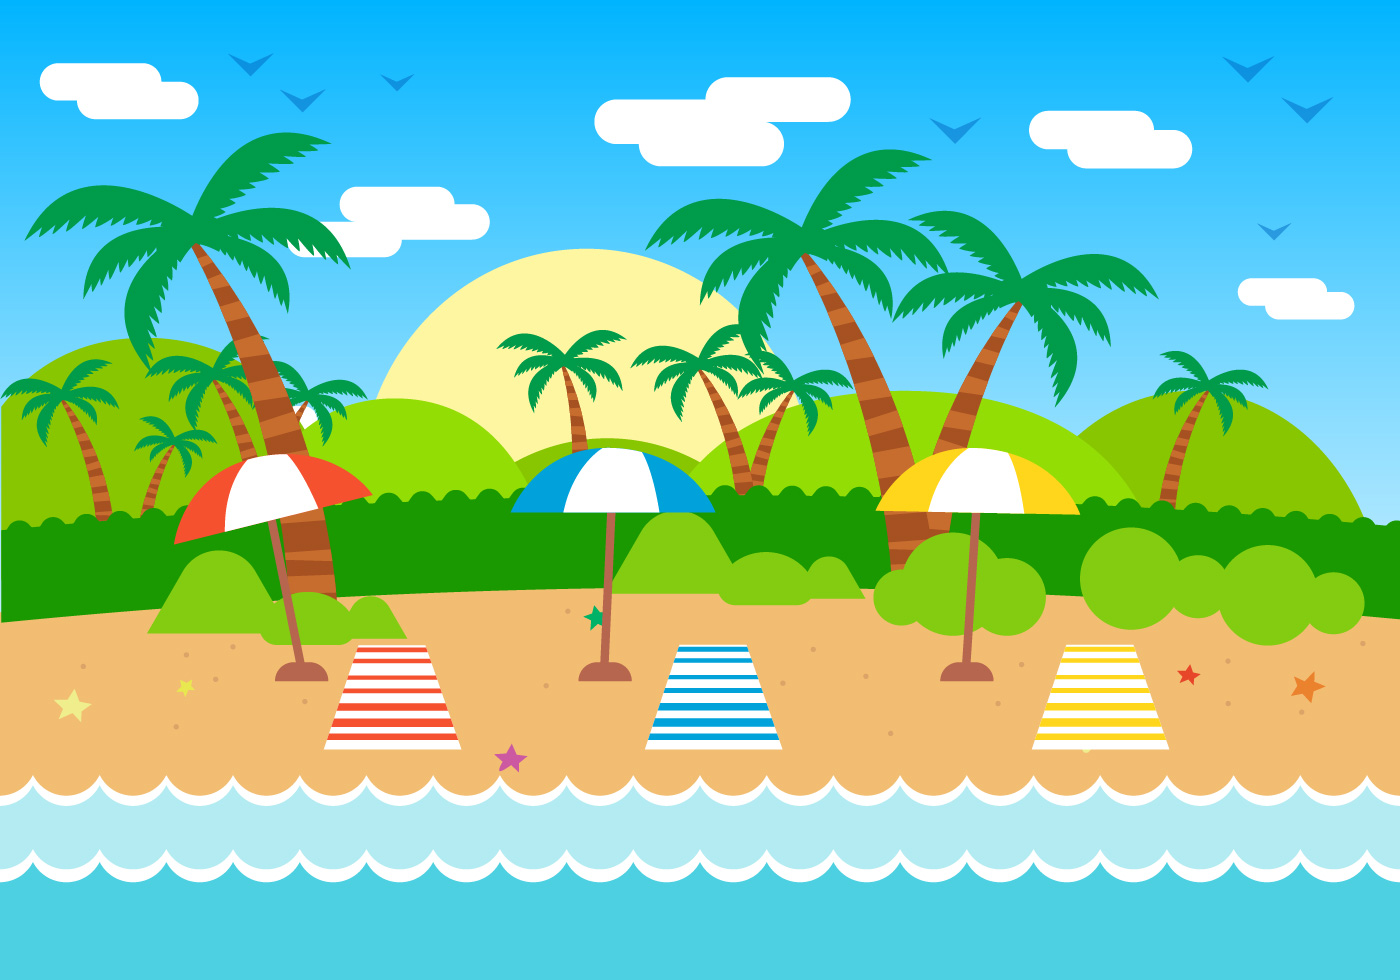 Free Summer Vector Illustration - Download Free Vectors ...